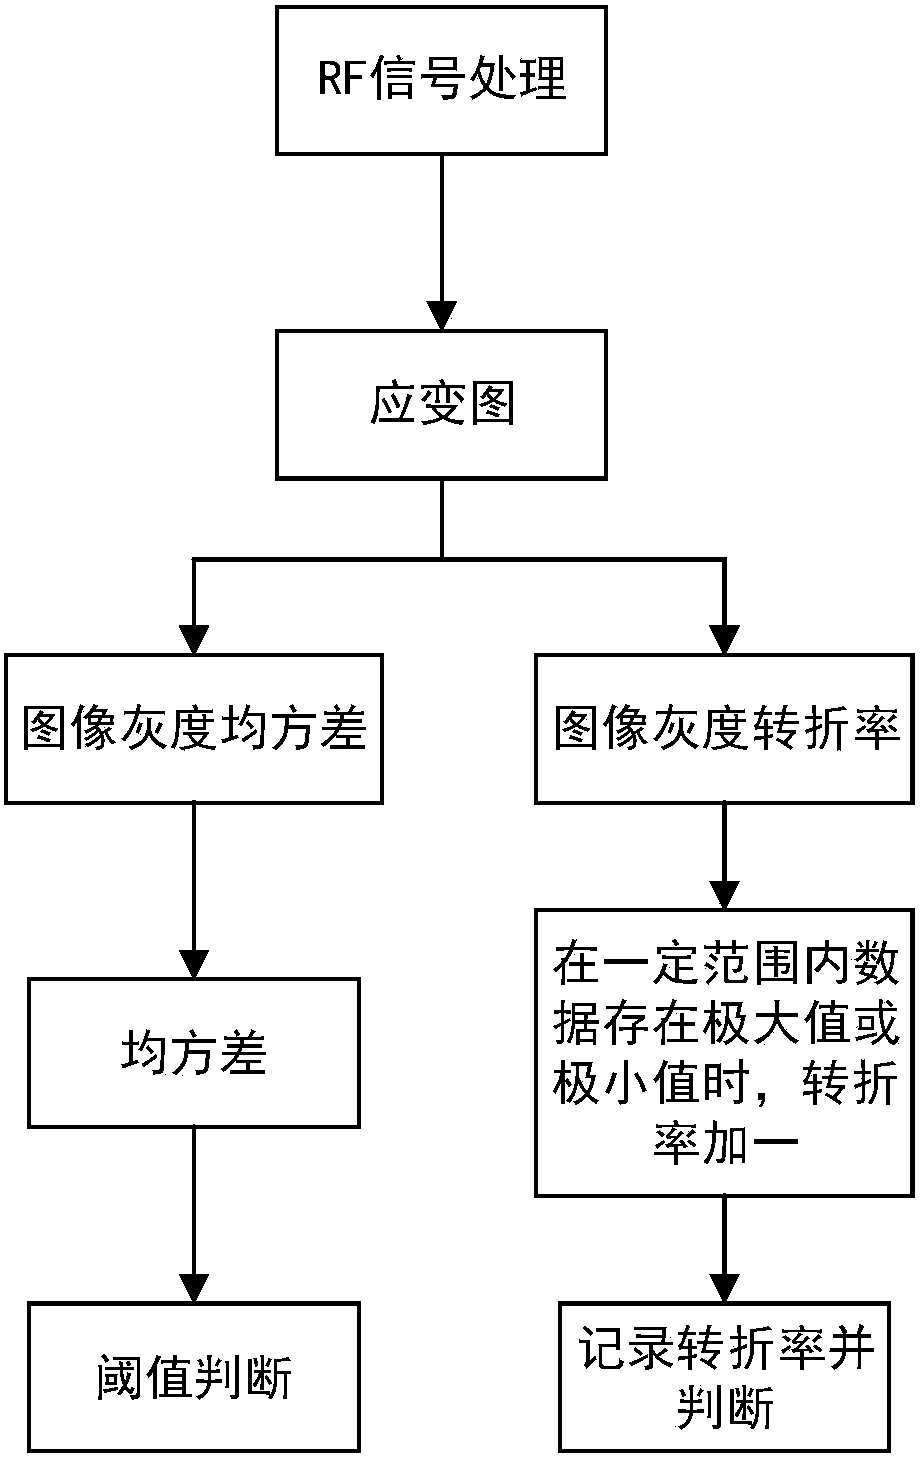 Strain diagram identification method based on ultrasonic transient elastography